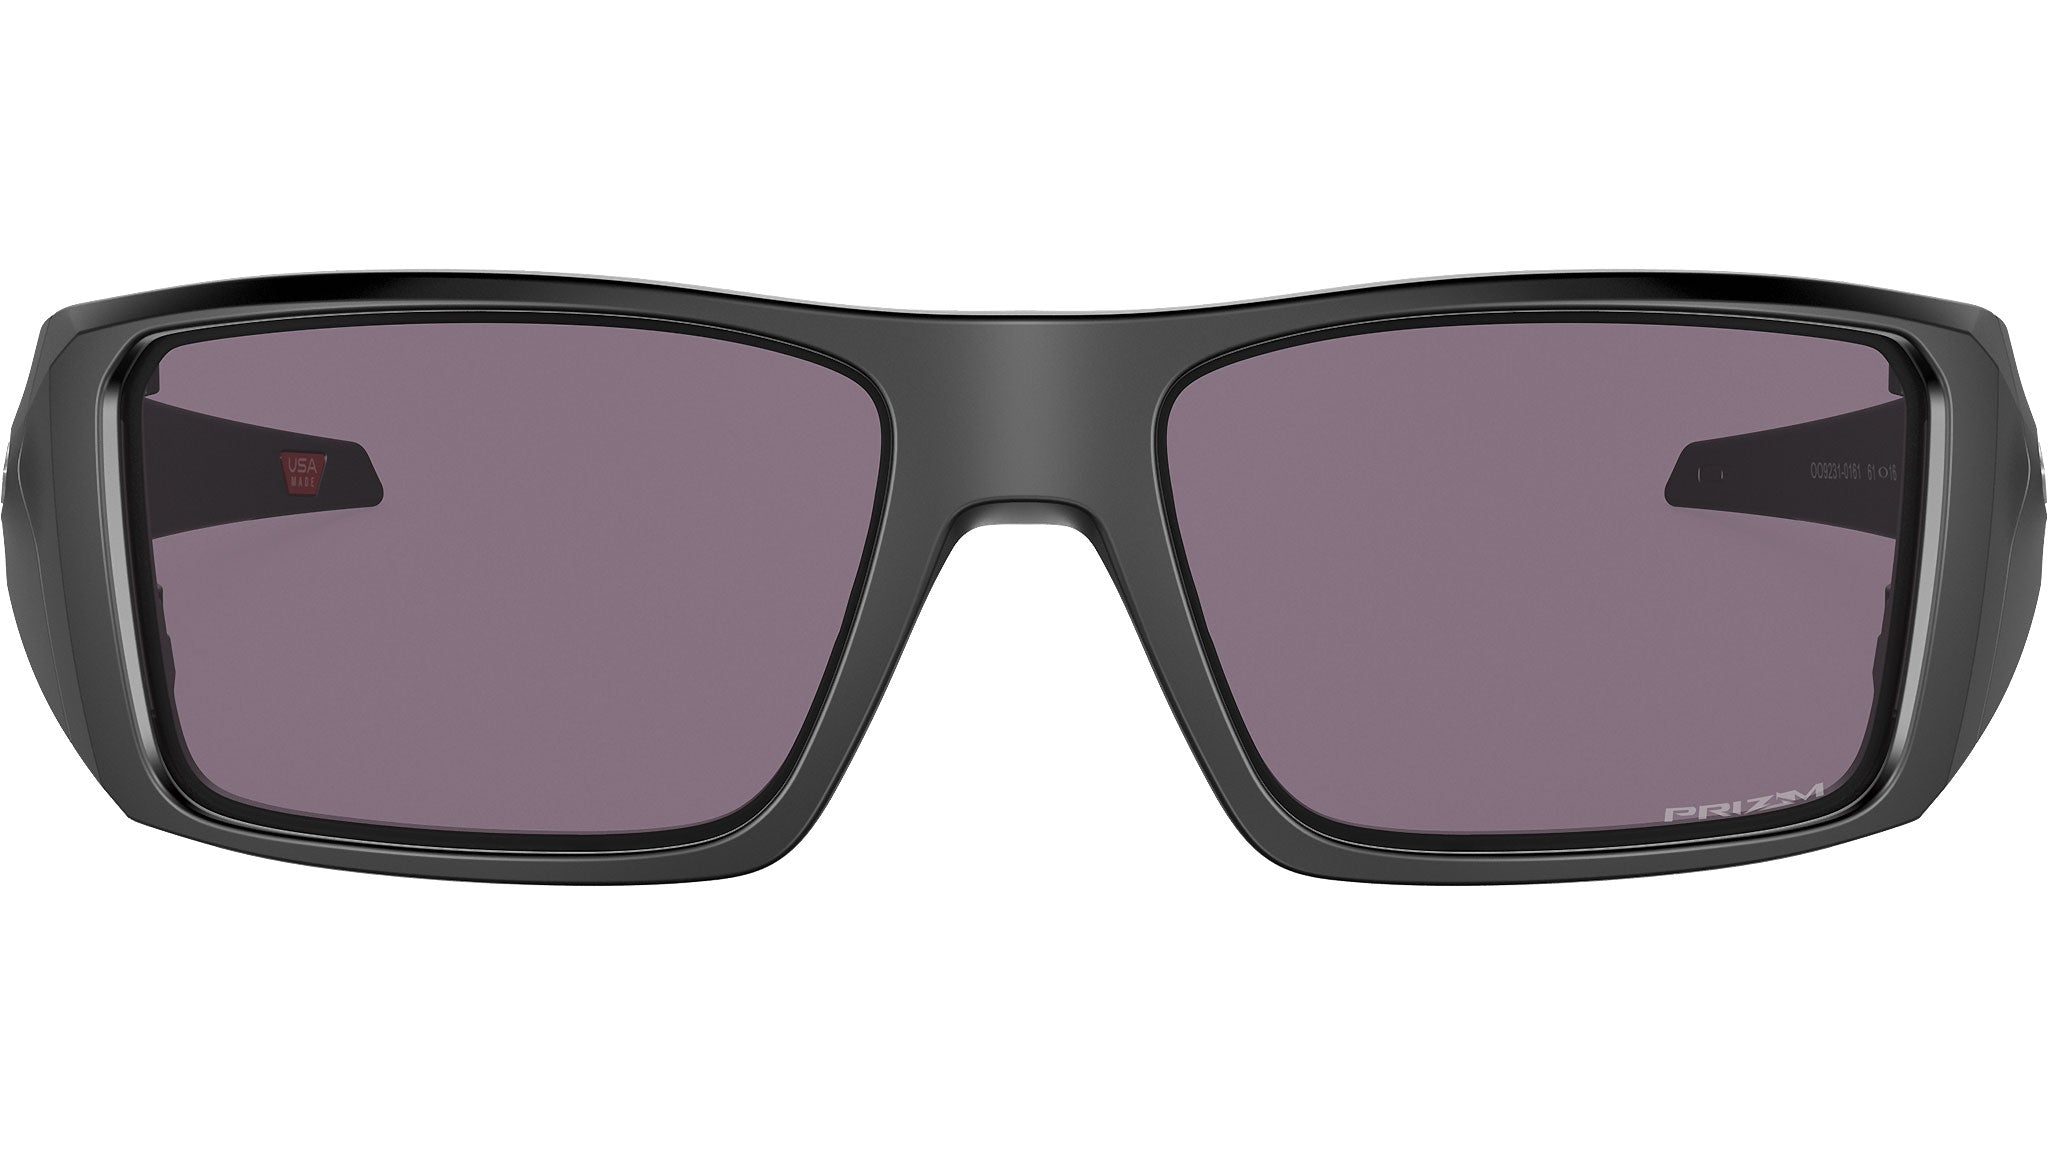 Oakley Gascan Made in USA sunglasses